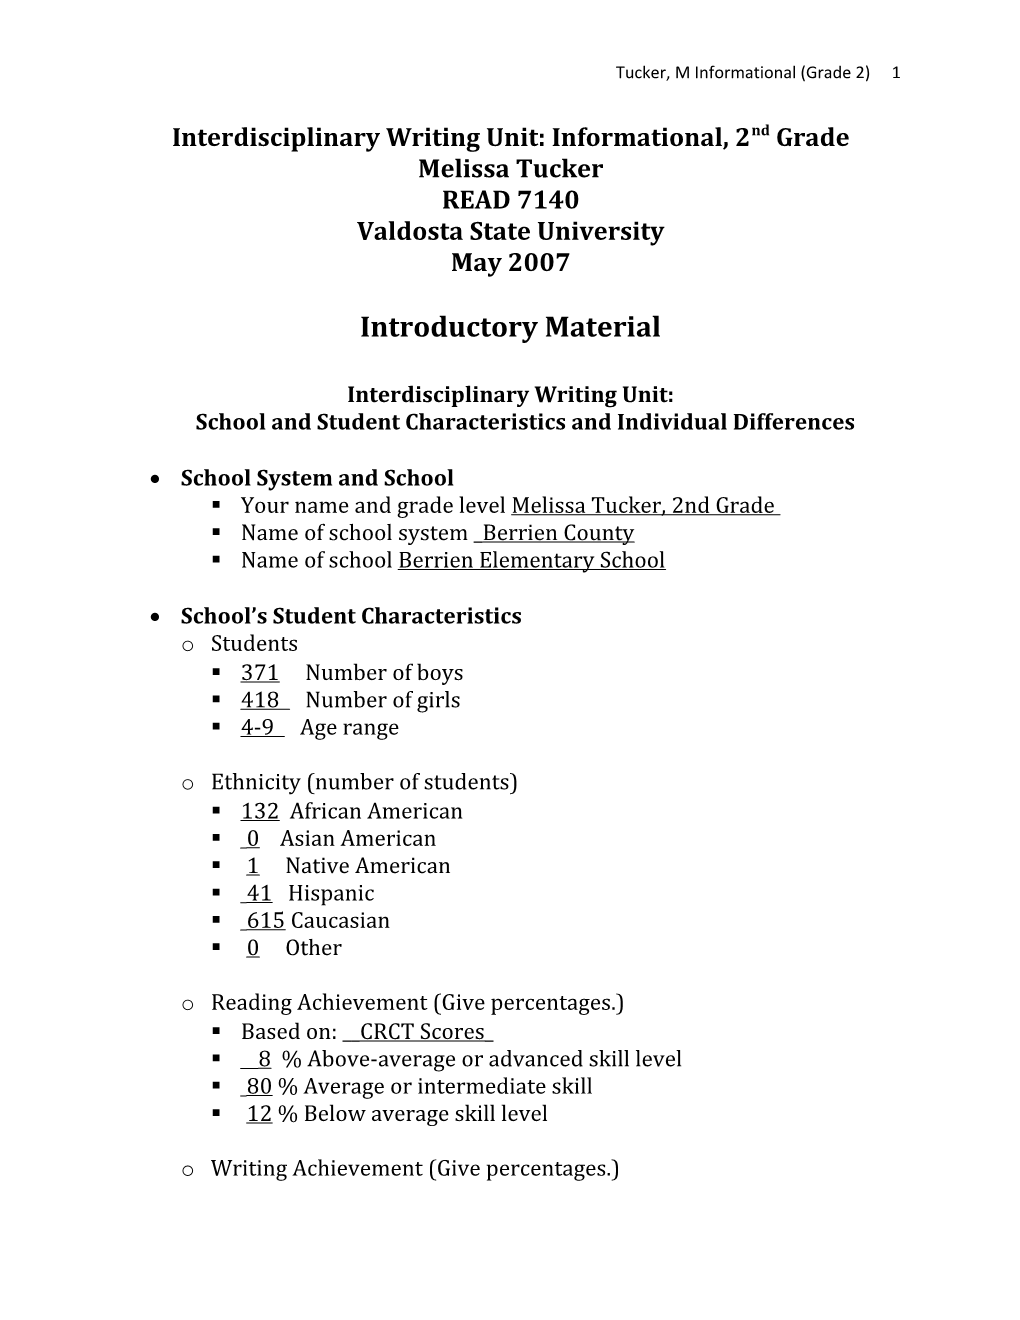 Interdisciplinary Writing Unit: Informational, 2Nd Grade